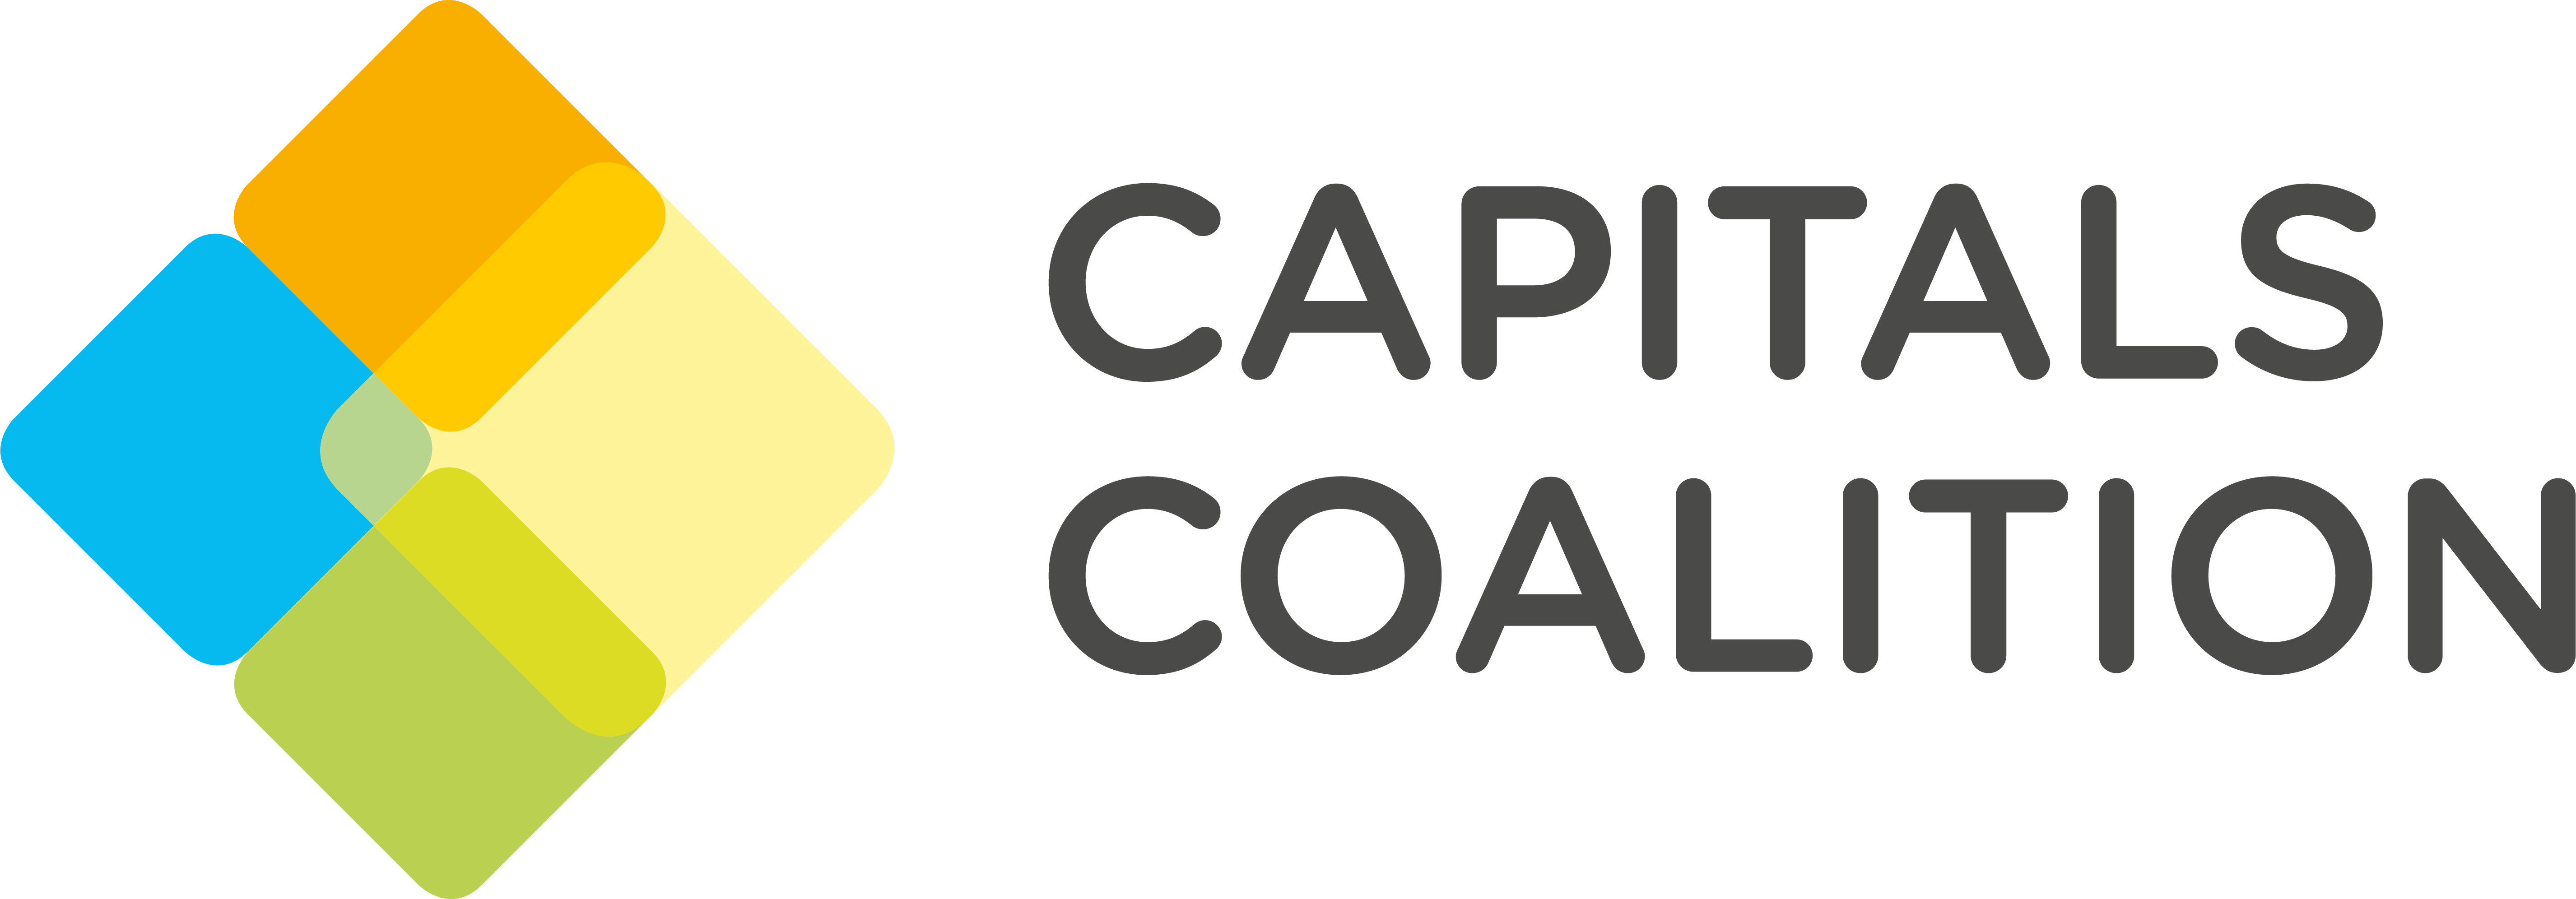 The Capital Coalitions logo